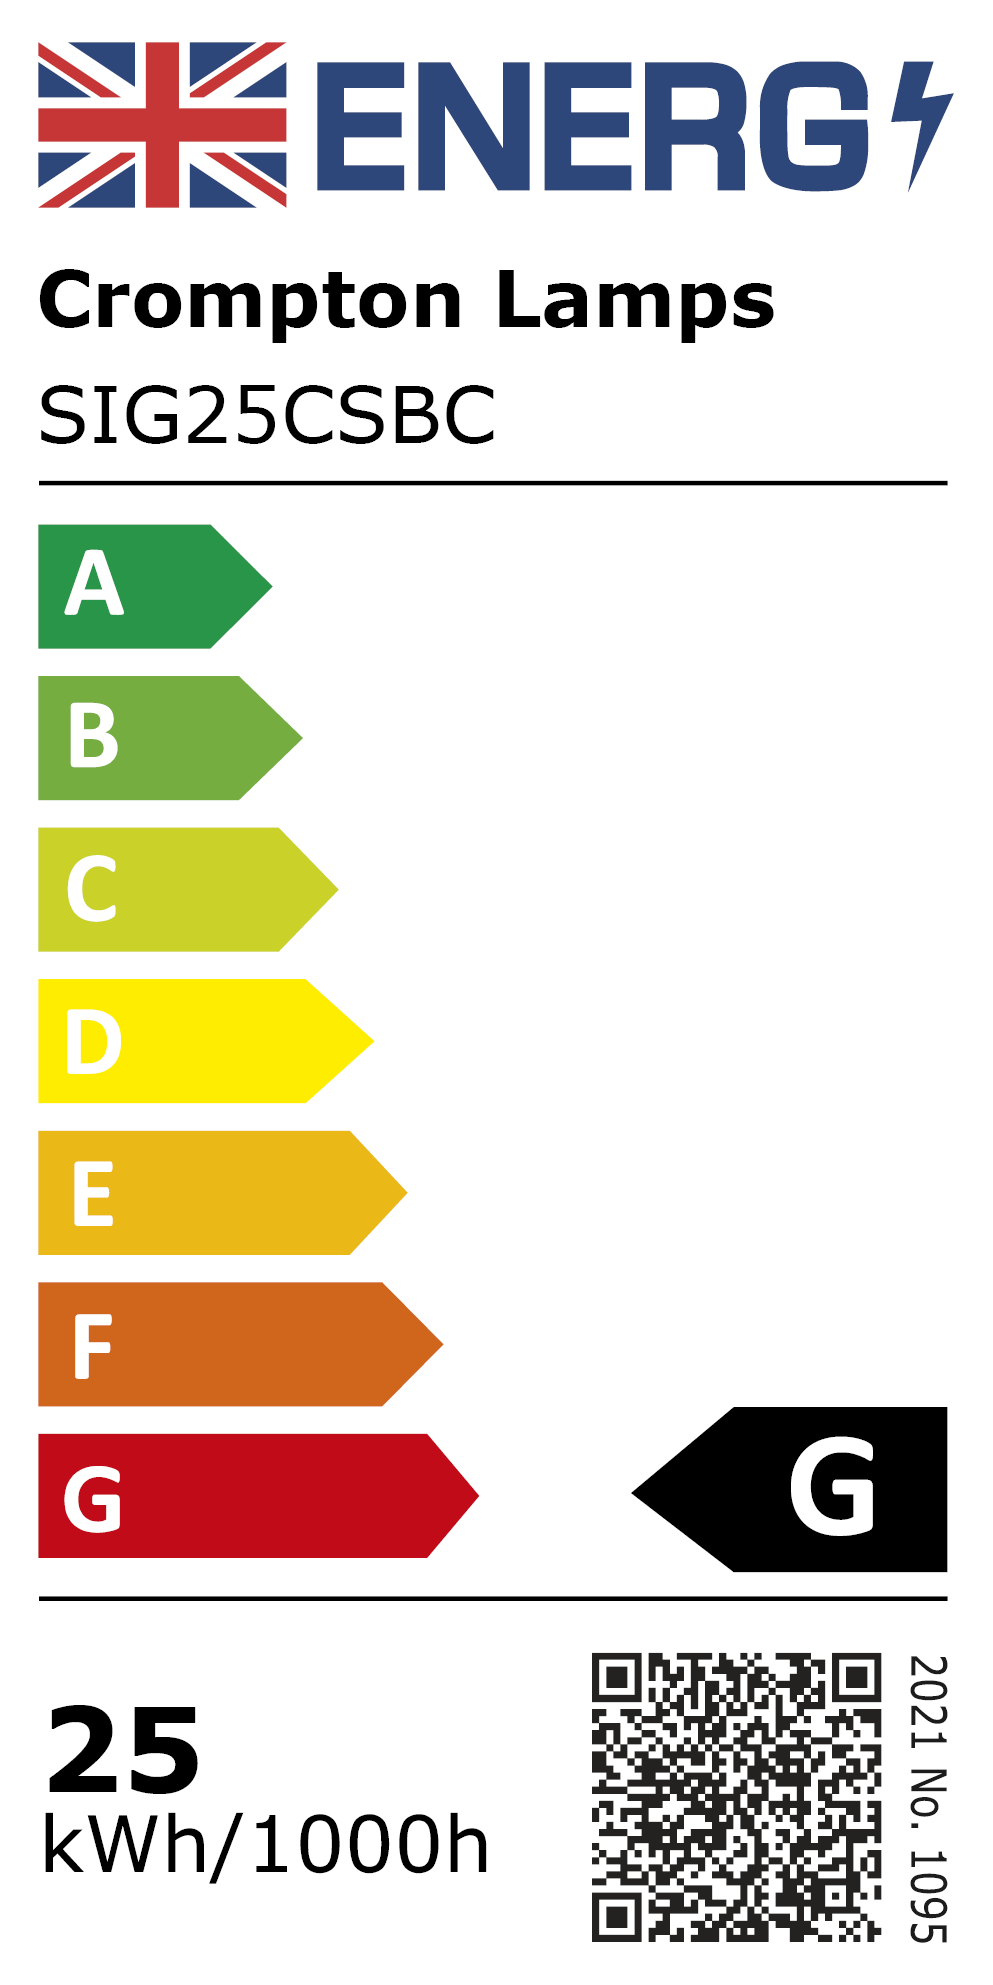 New 2021 Energy Rating Label: Stock Code SIG25CSBC